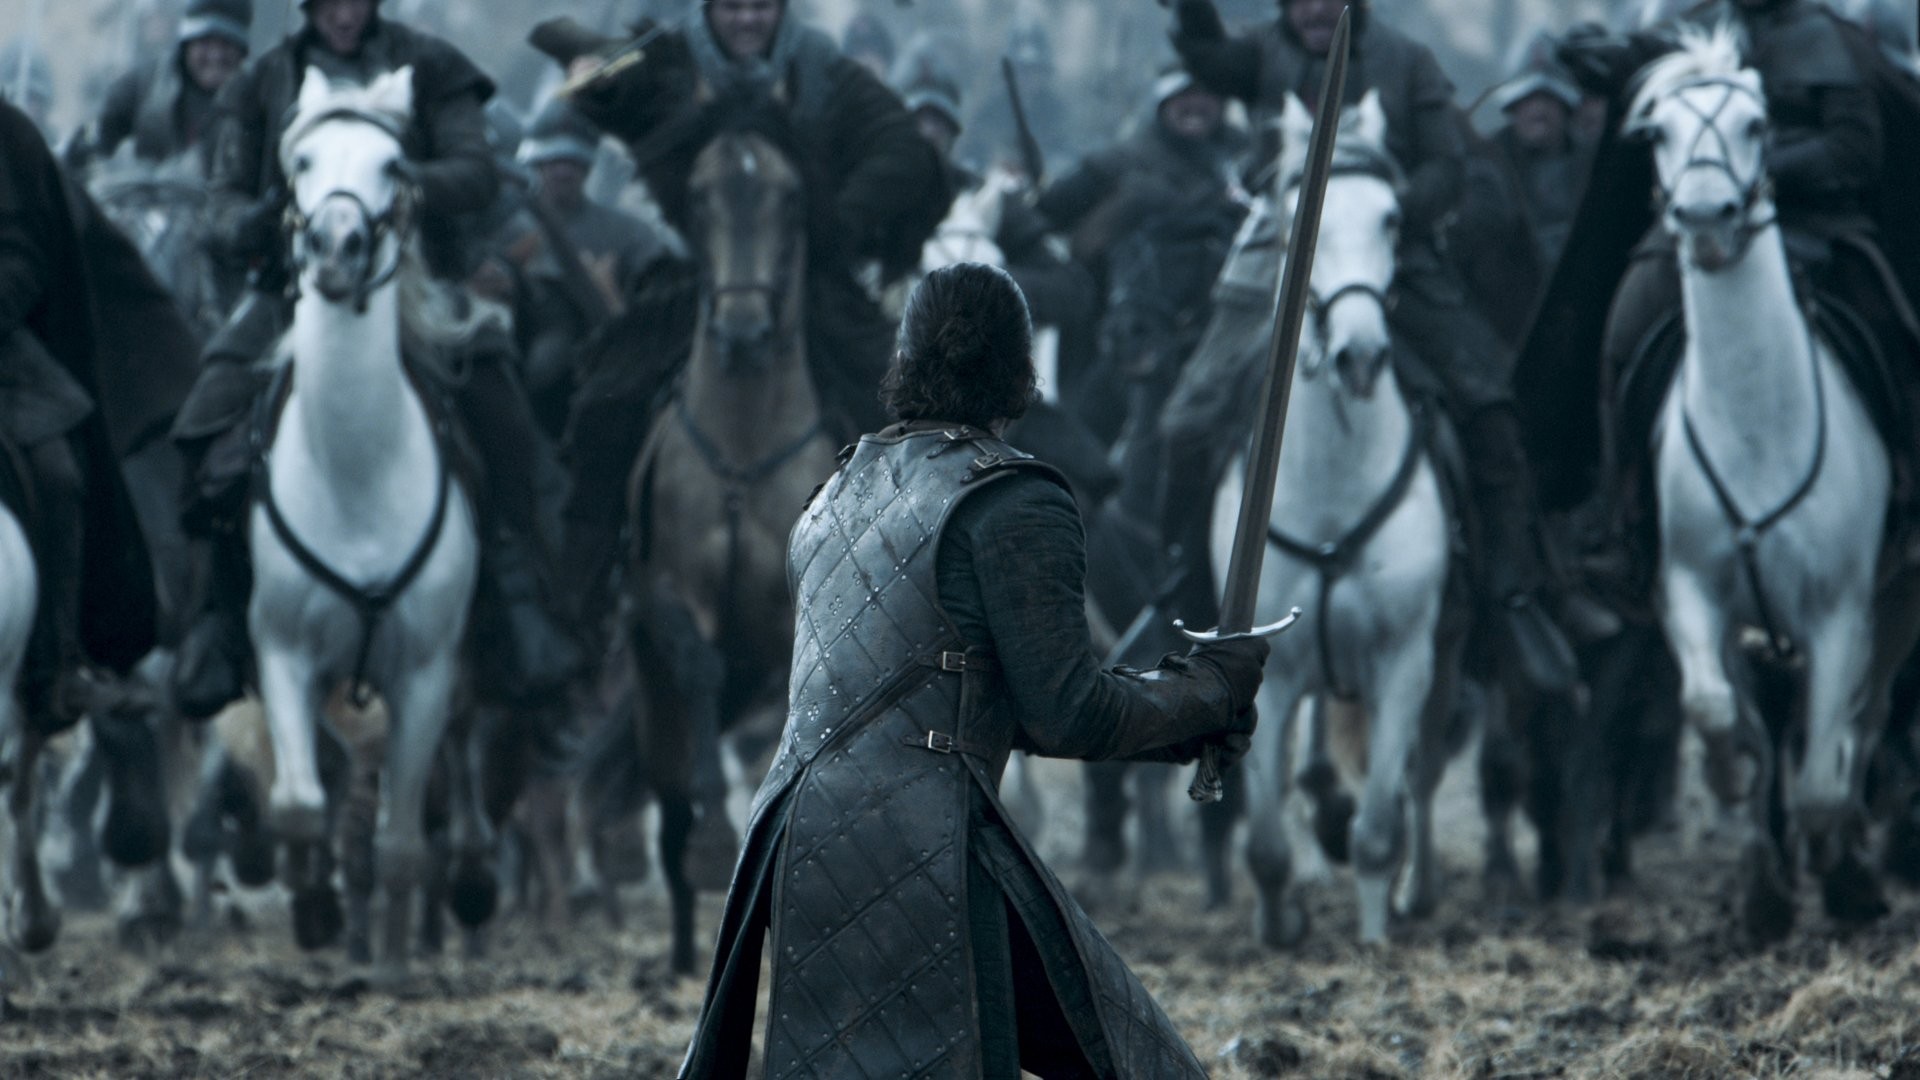 People 1920x1080 Game of Thrones Battle of the Bastards Jon Snow Kit Harington TV series actor film stills sword men horse